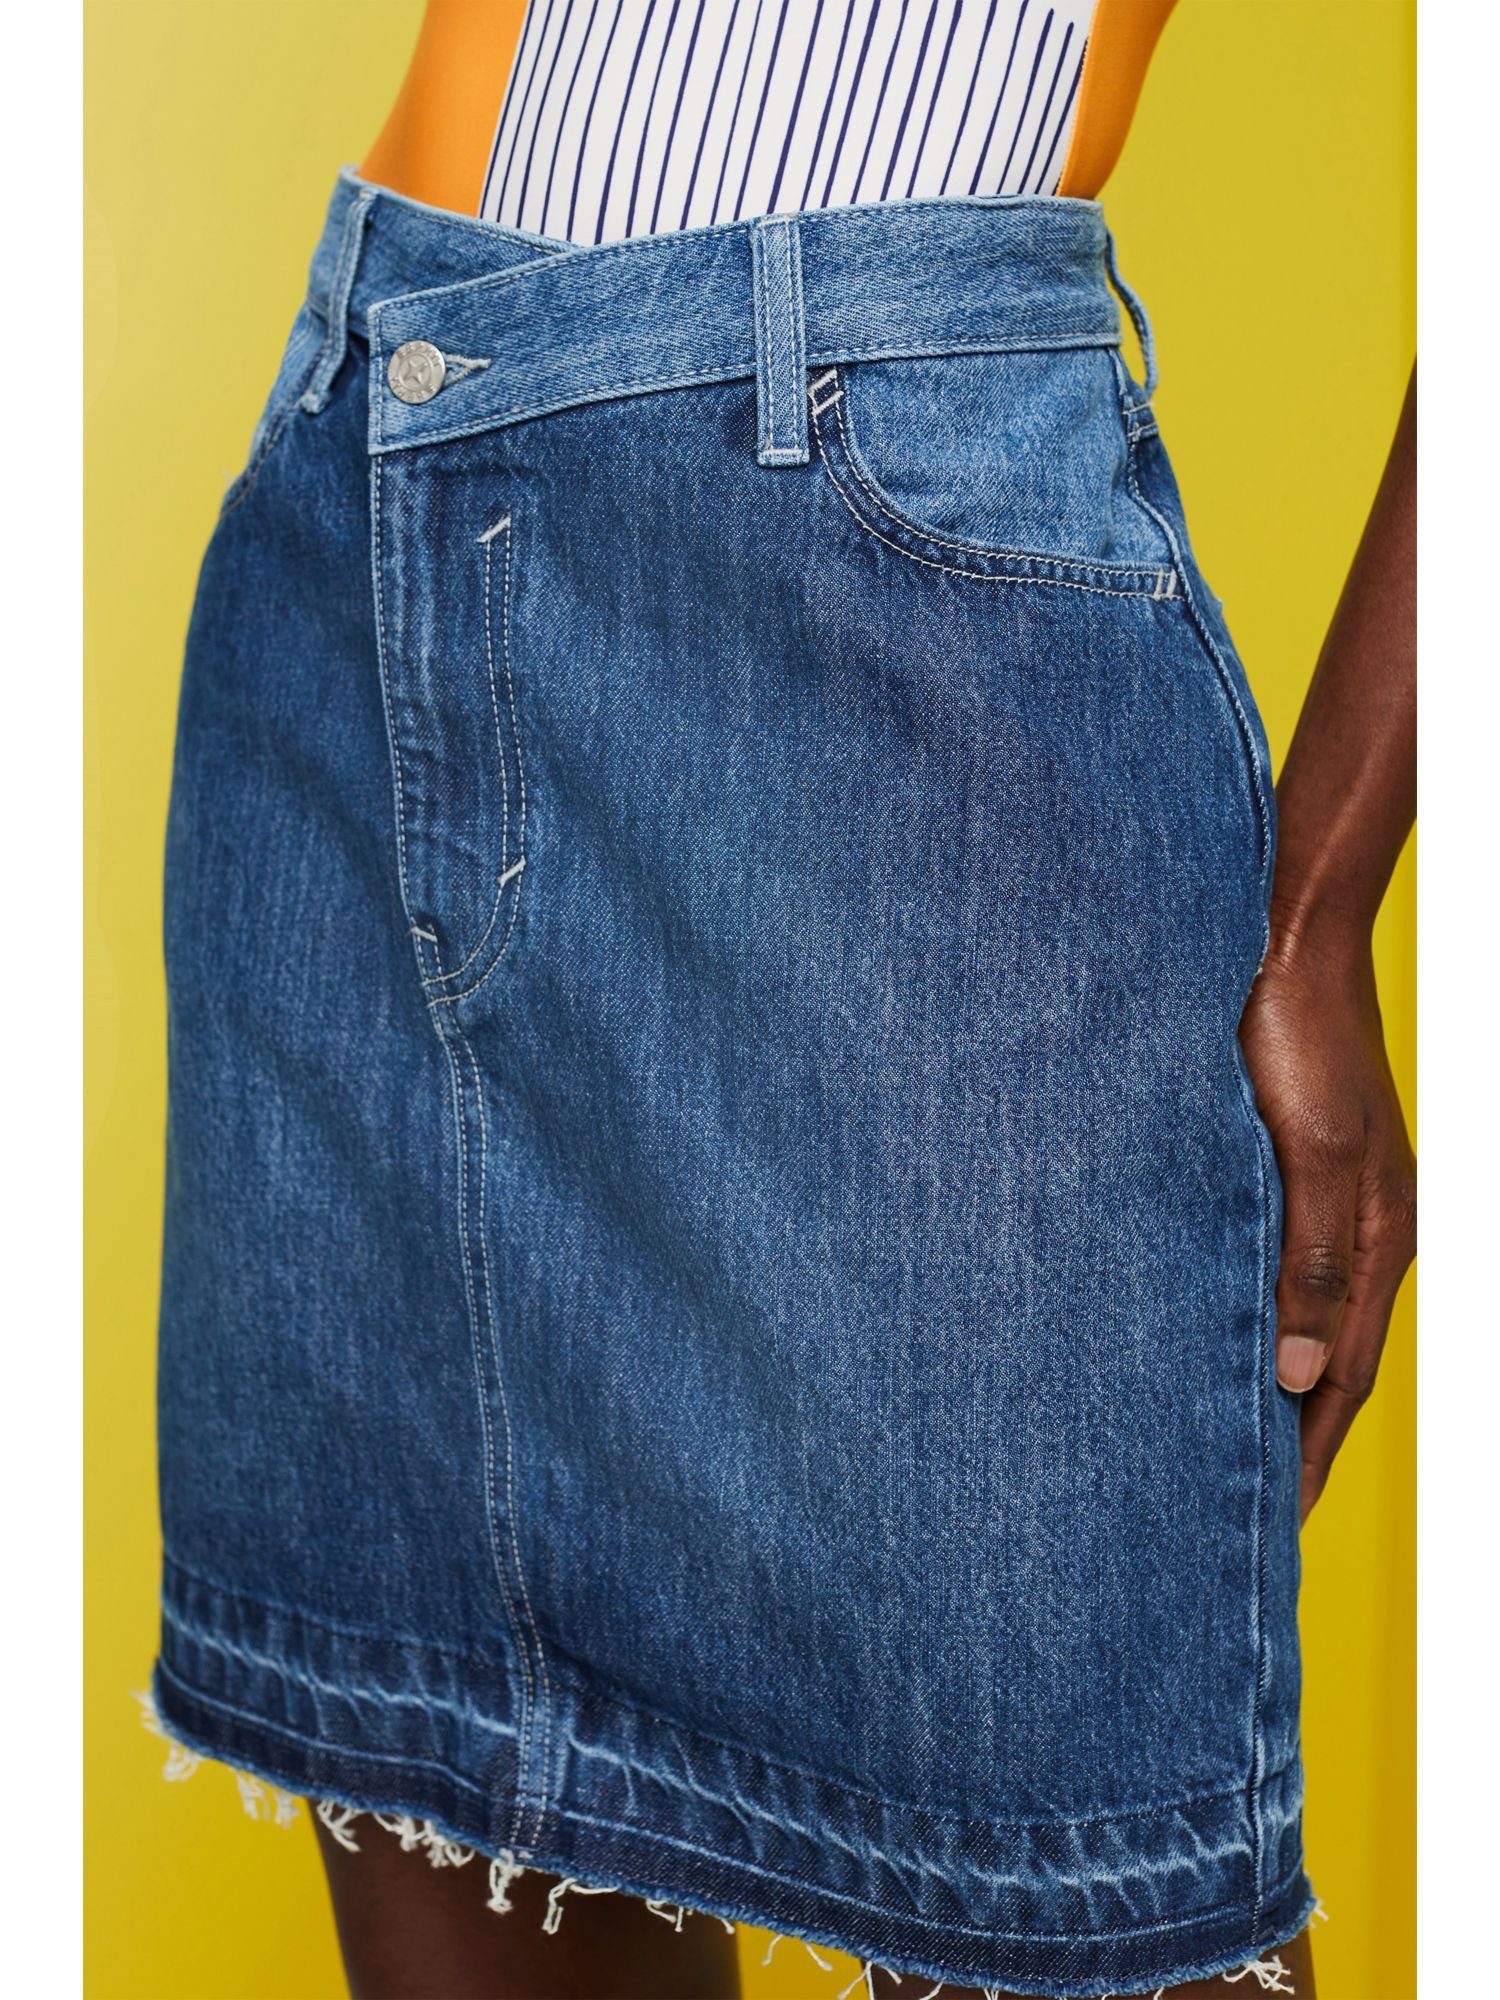 Esprit Jeansrock Jeans-Minirock Saum asymmetrischem mit